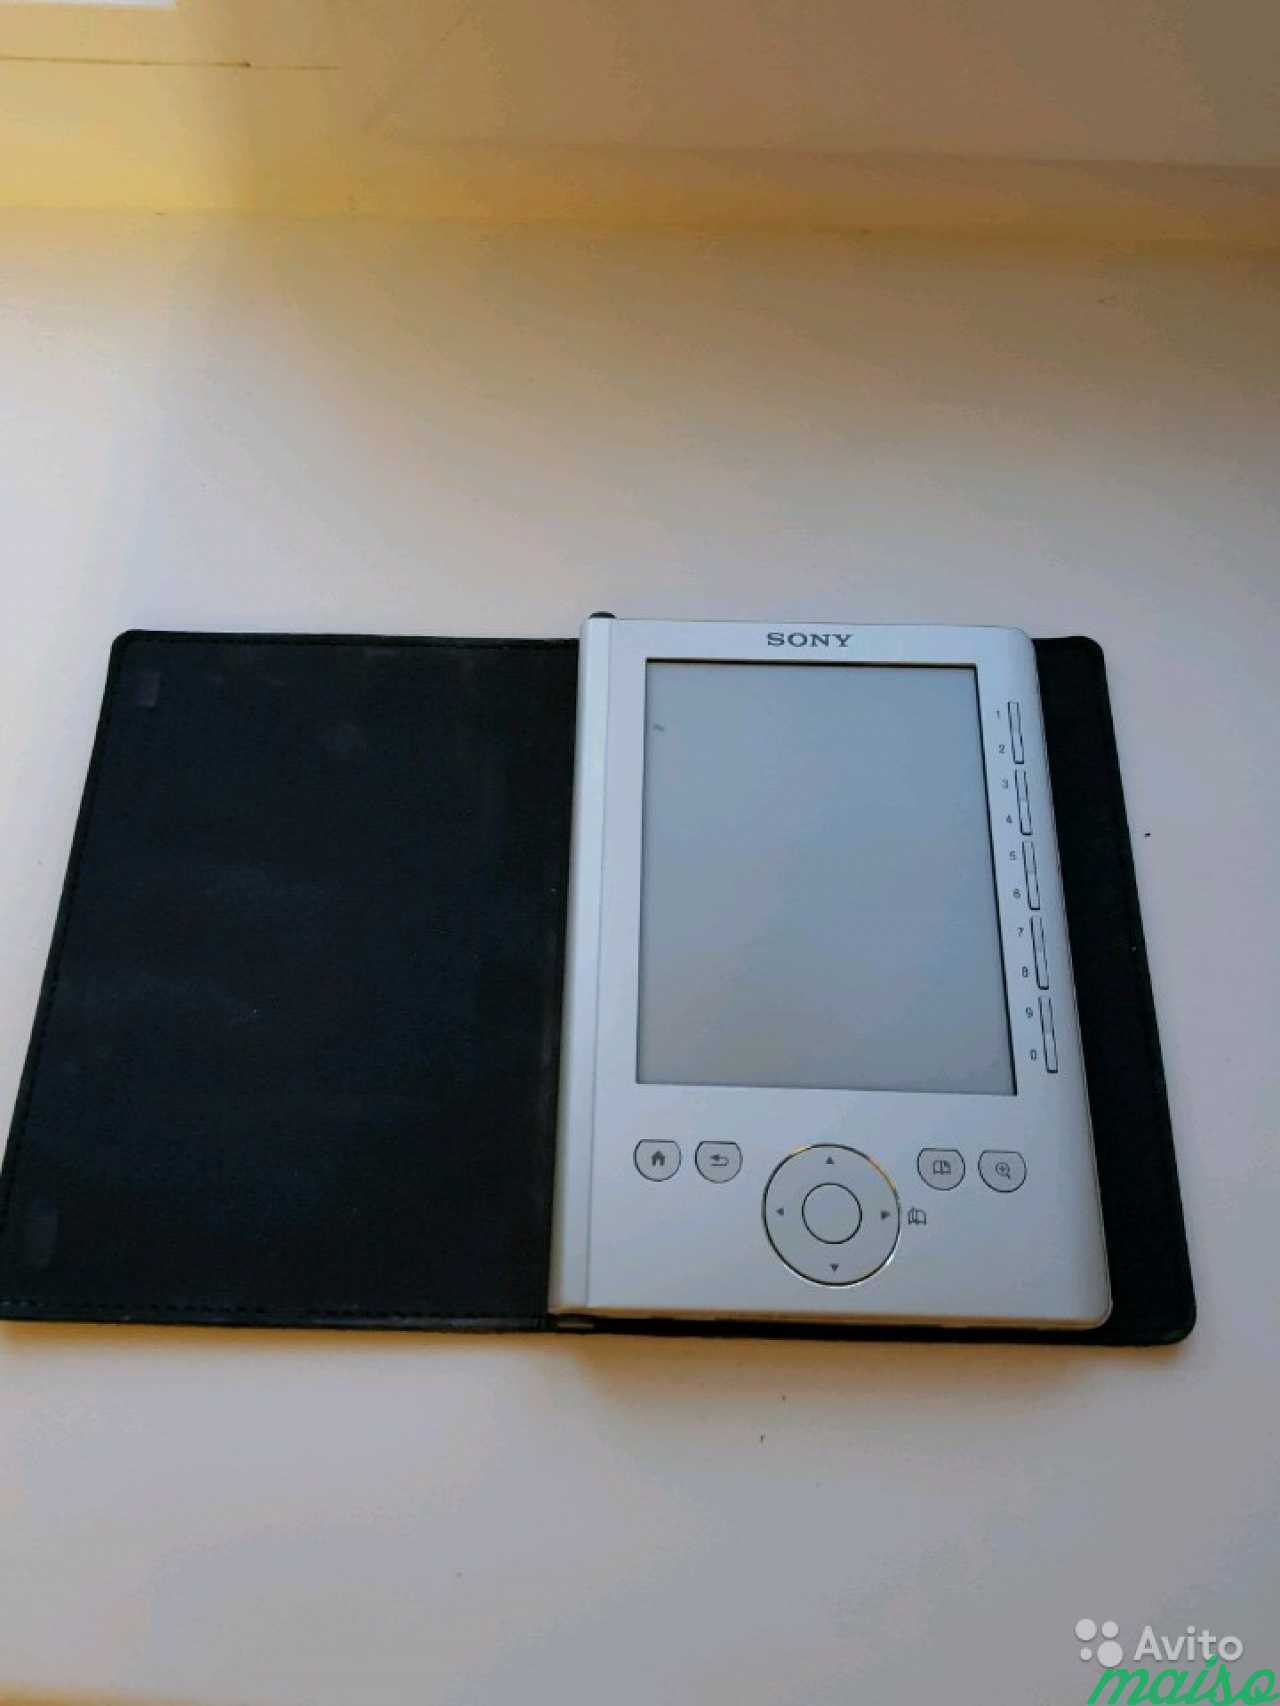 Sony prs-300 pocket edition